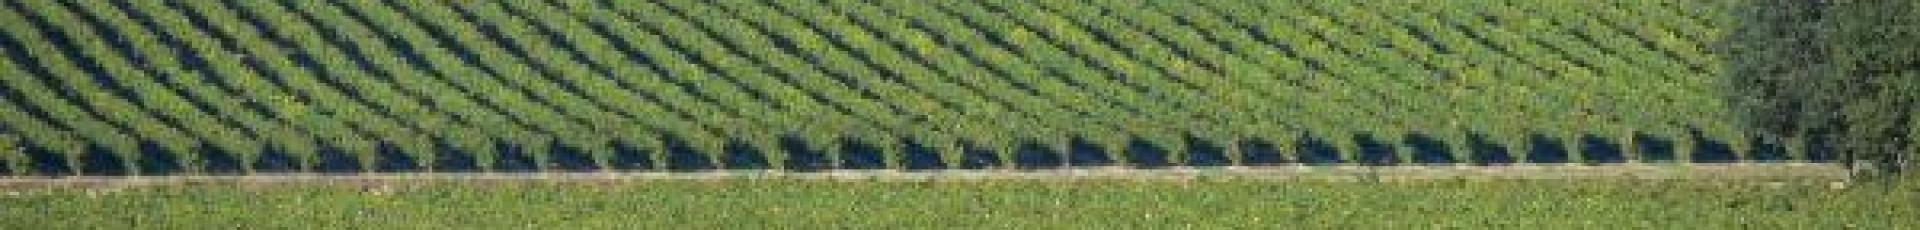 vignes Charente